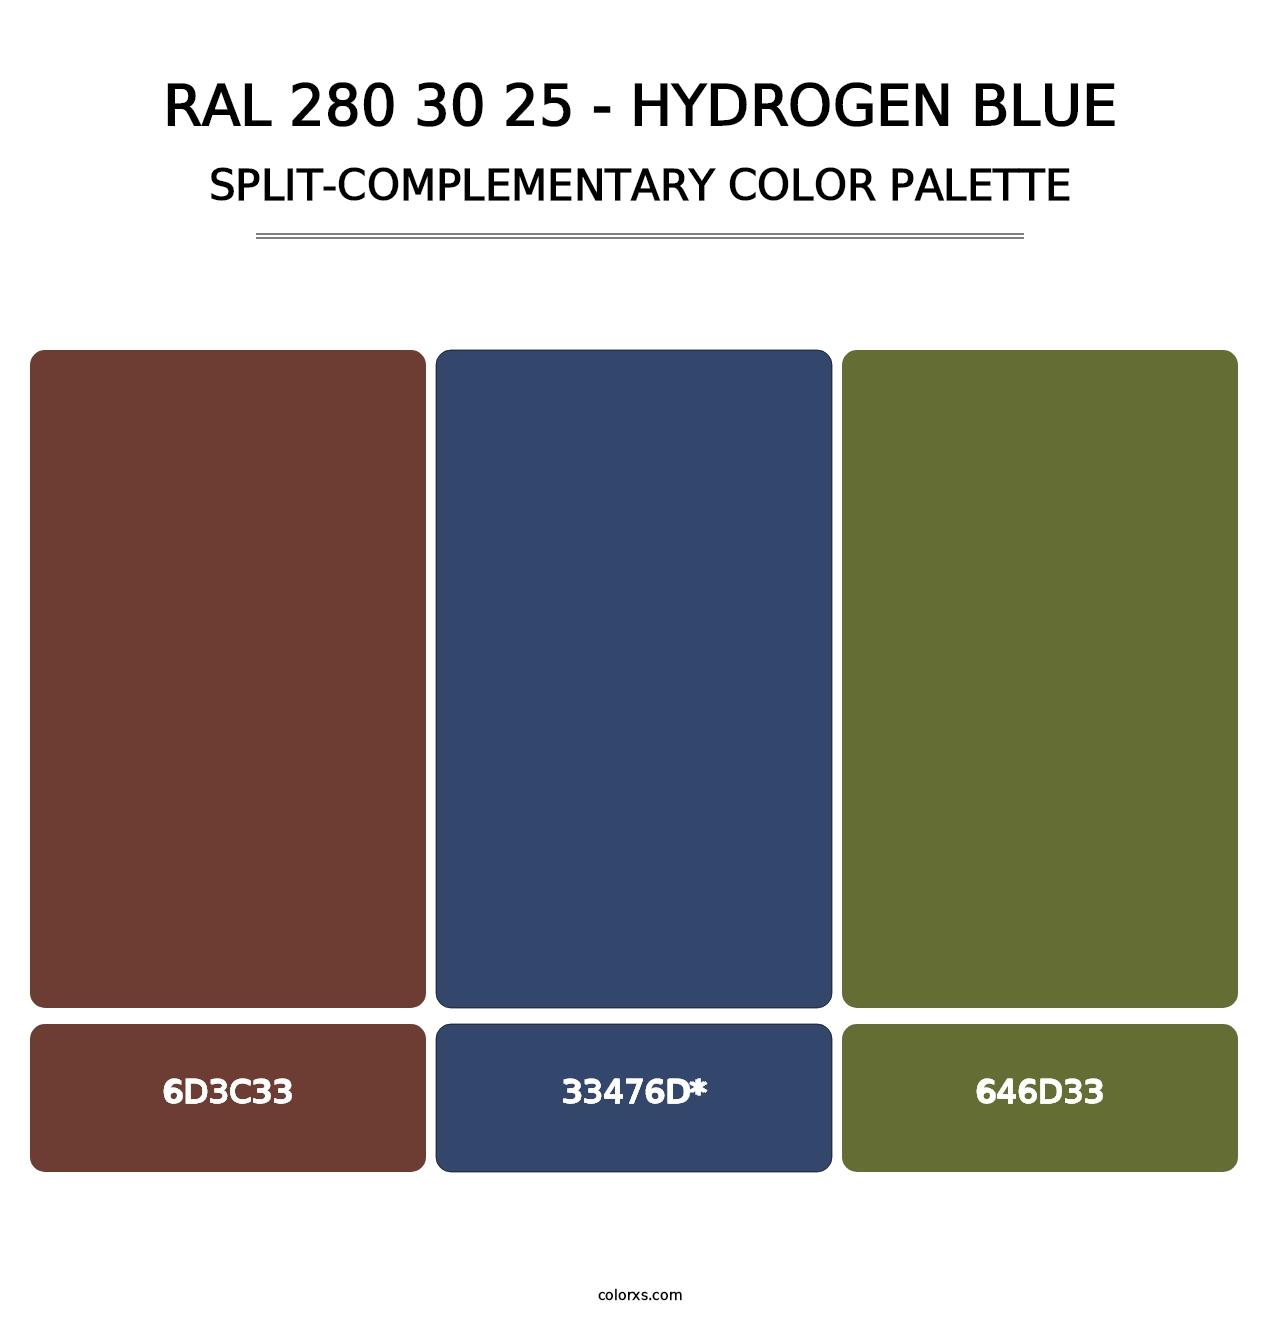 RAL 280 30 25 - Hydrogen Blue - Split-Complementary Color Palette